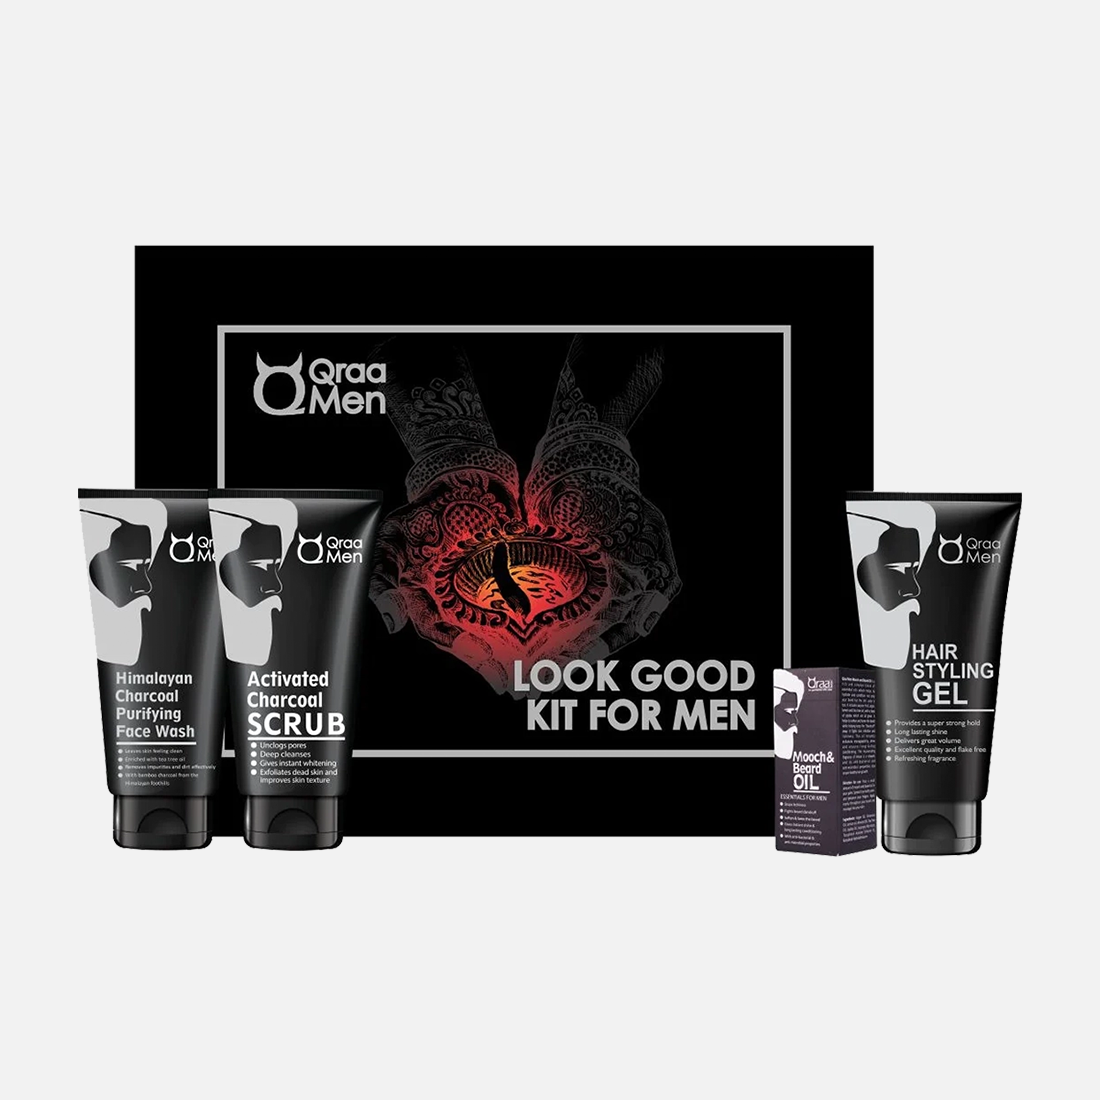 Look Good Qraa Men Kit ( Gift collection)